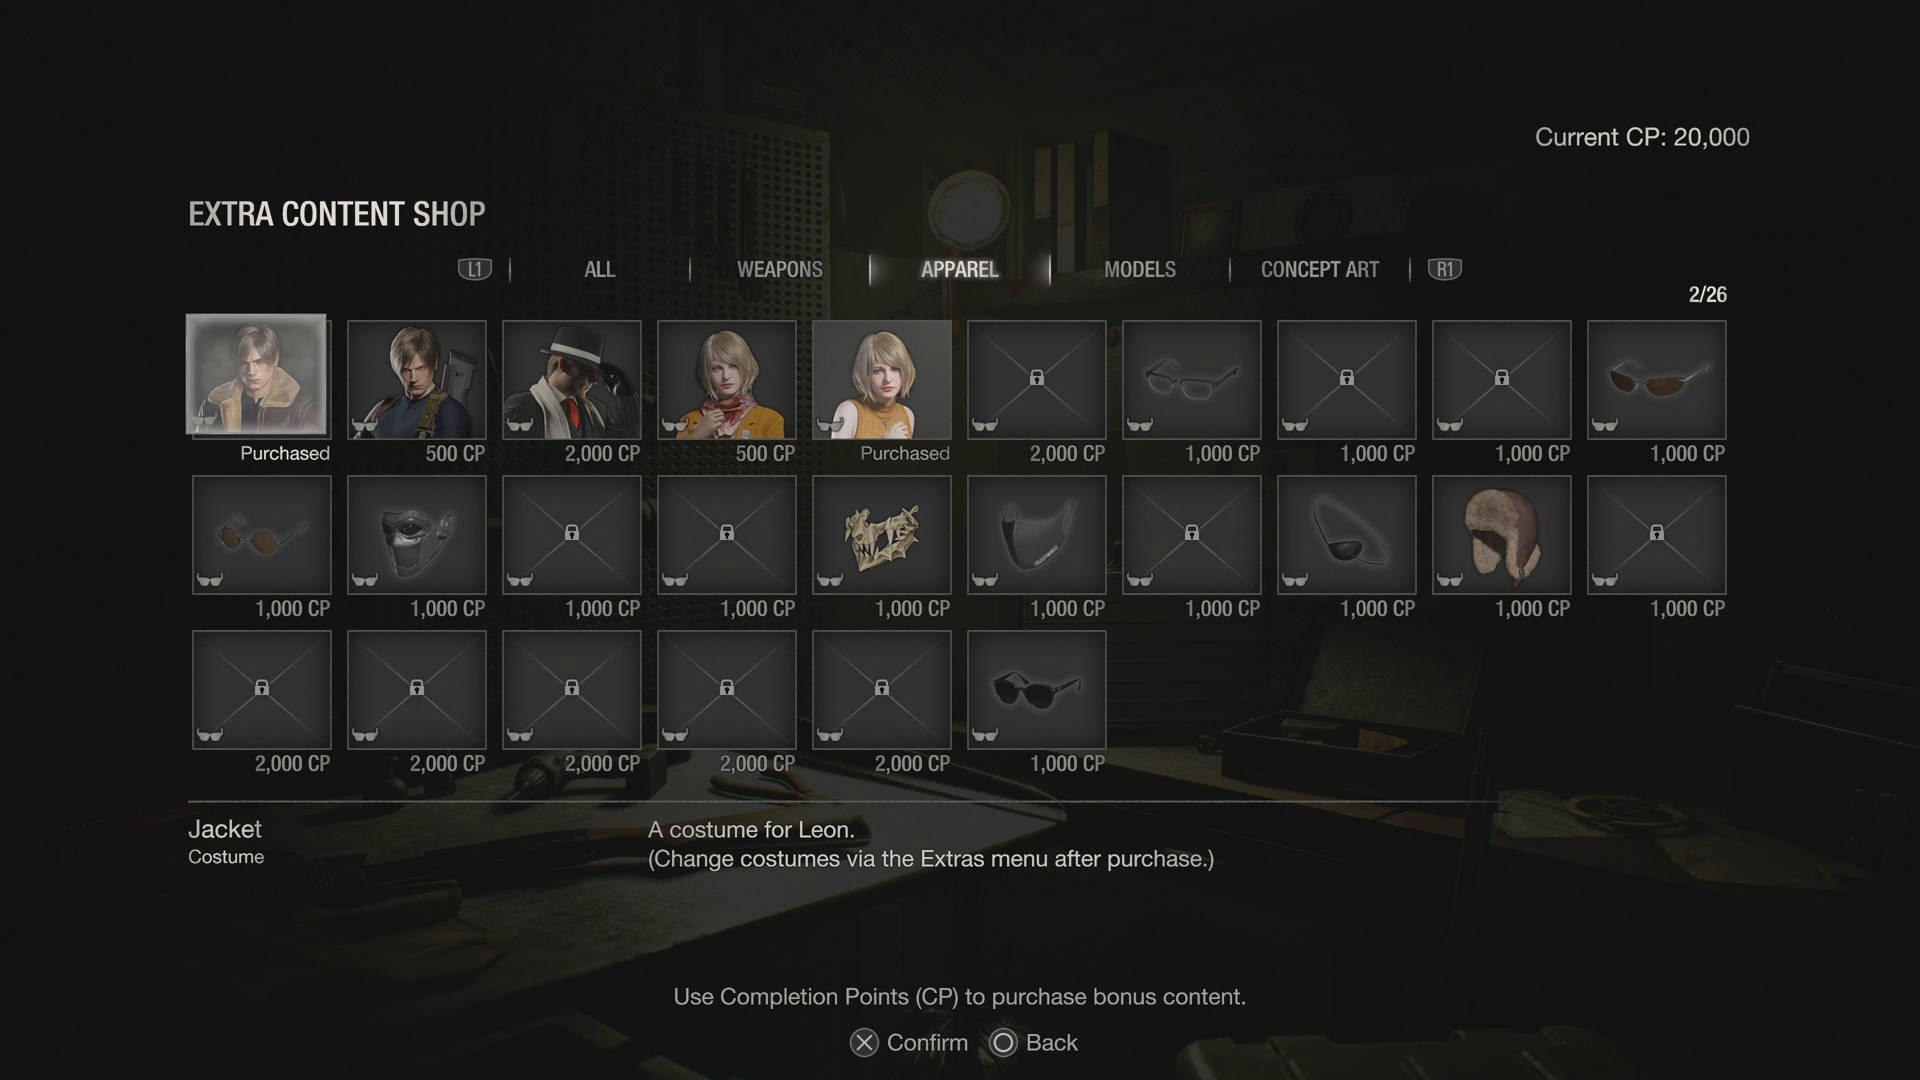 Resident Evil 4 - Unlockable Costumes And Bonus Weapons Guide - GameSpot